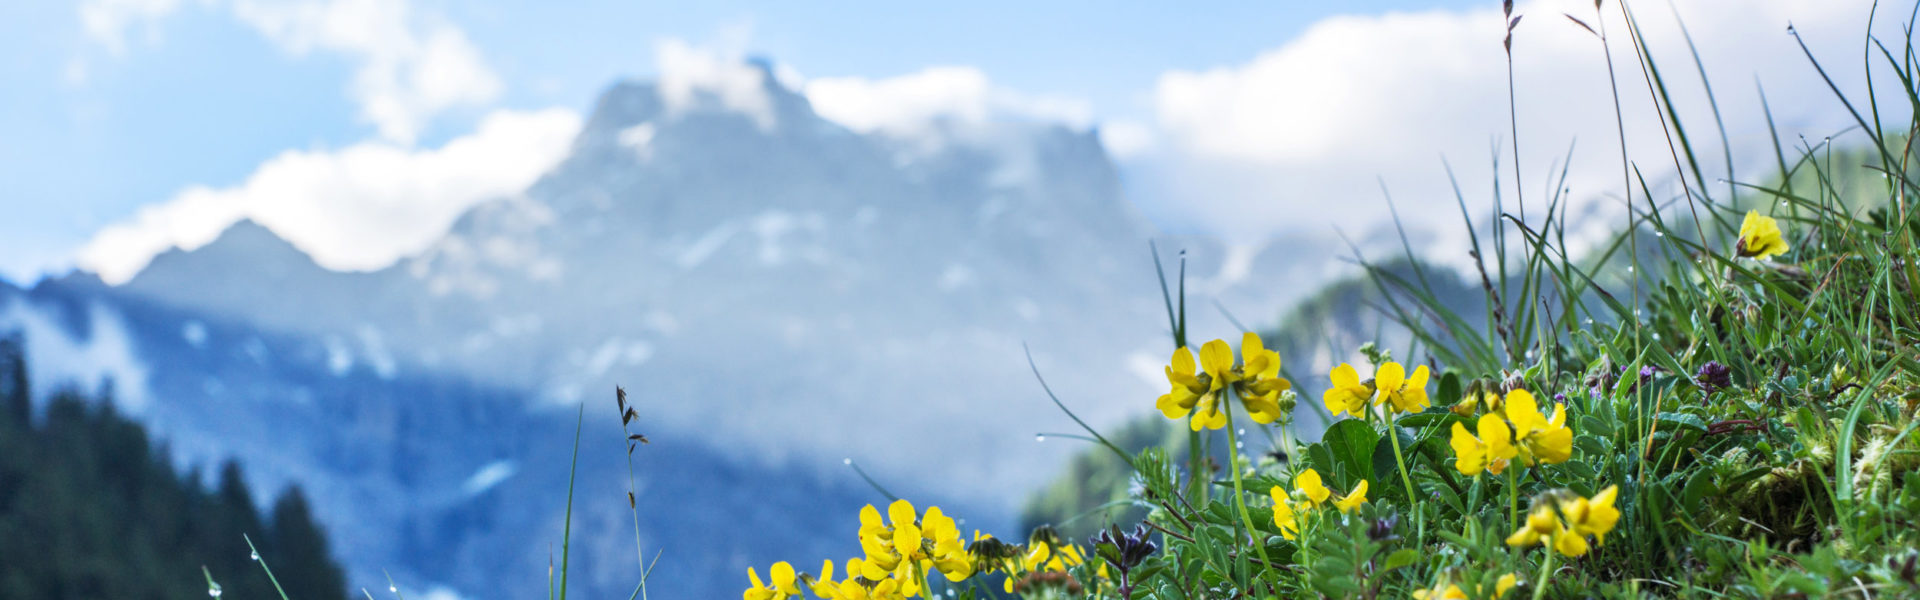 Blumenwiese mit Panuelerkopf, Vorarlberg Tourismus © Helmut Düringer